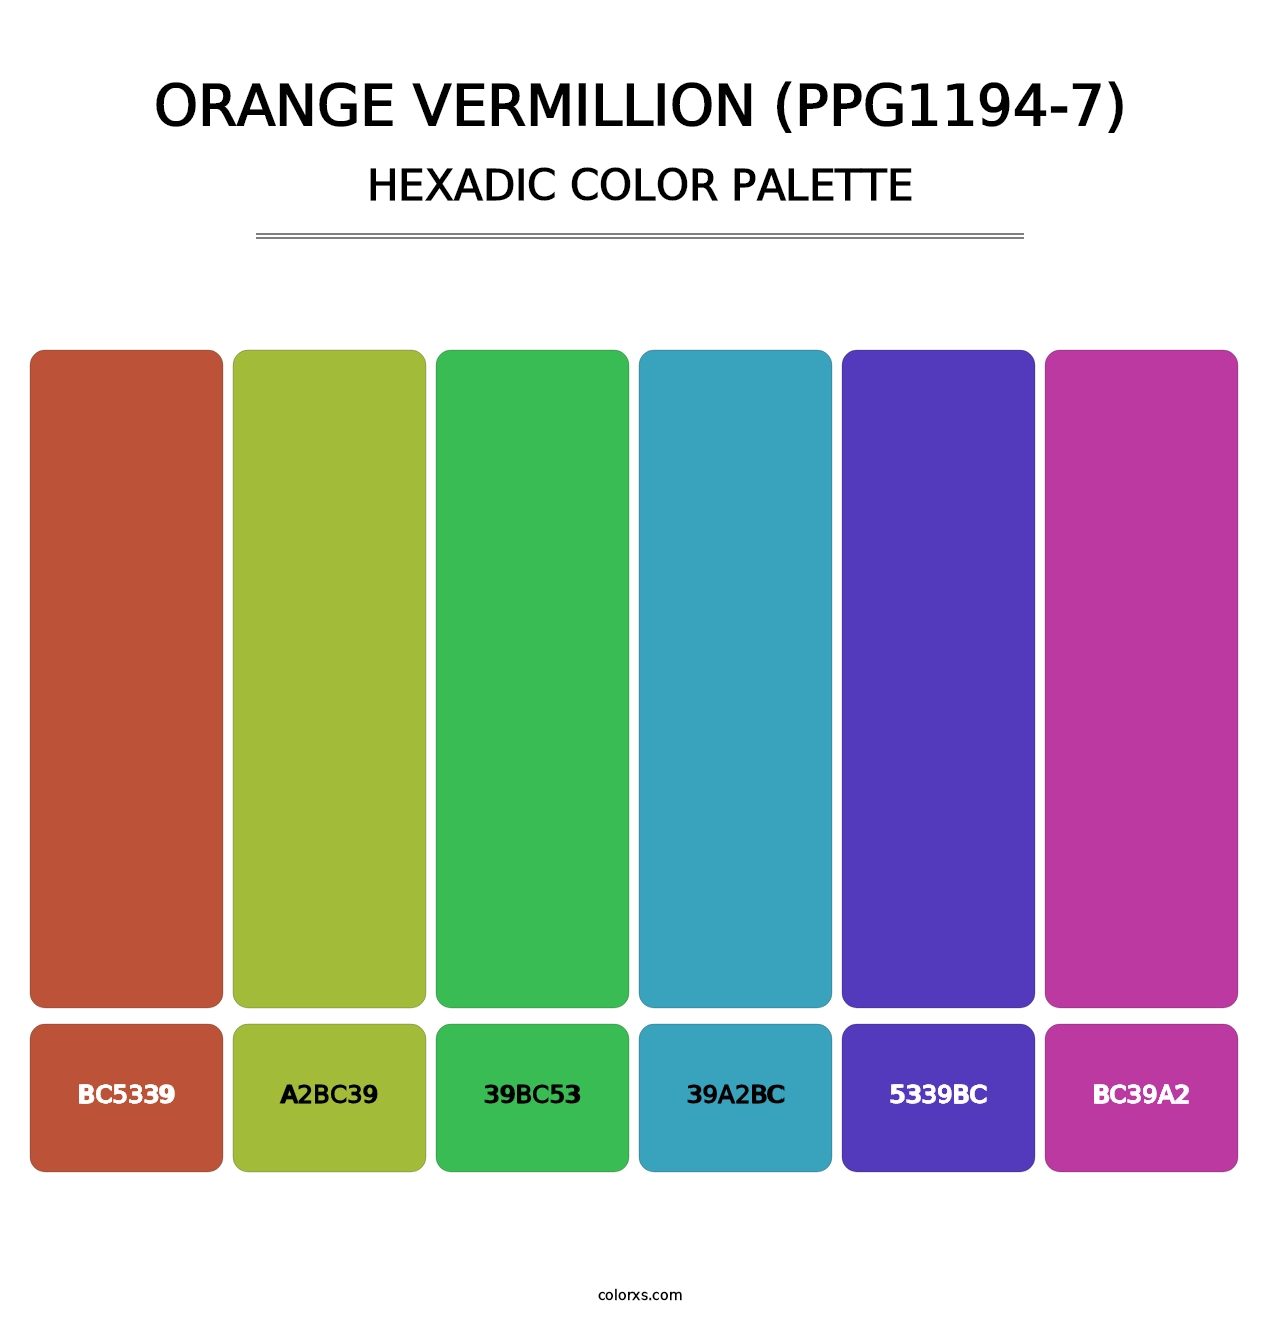 Orange Vermillion (PPG1194-7) - Hexadic Color Palette